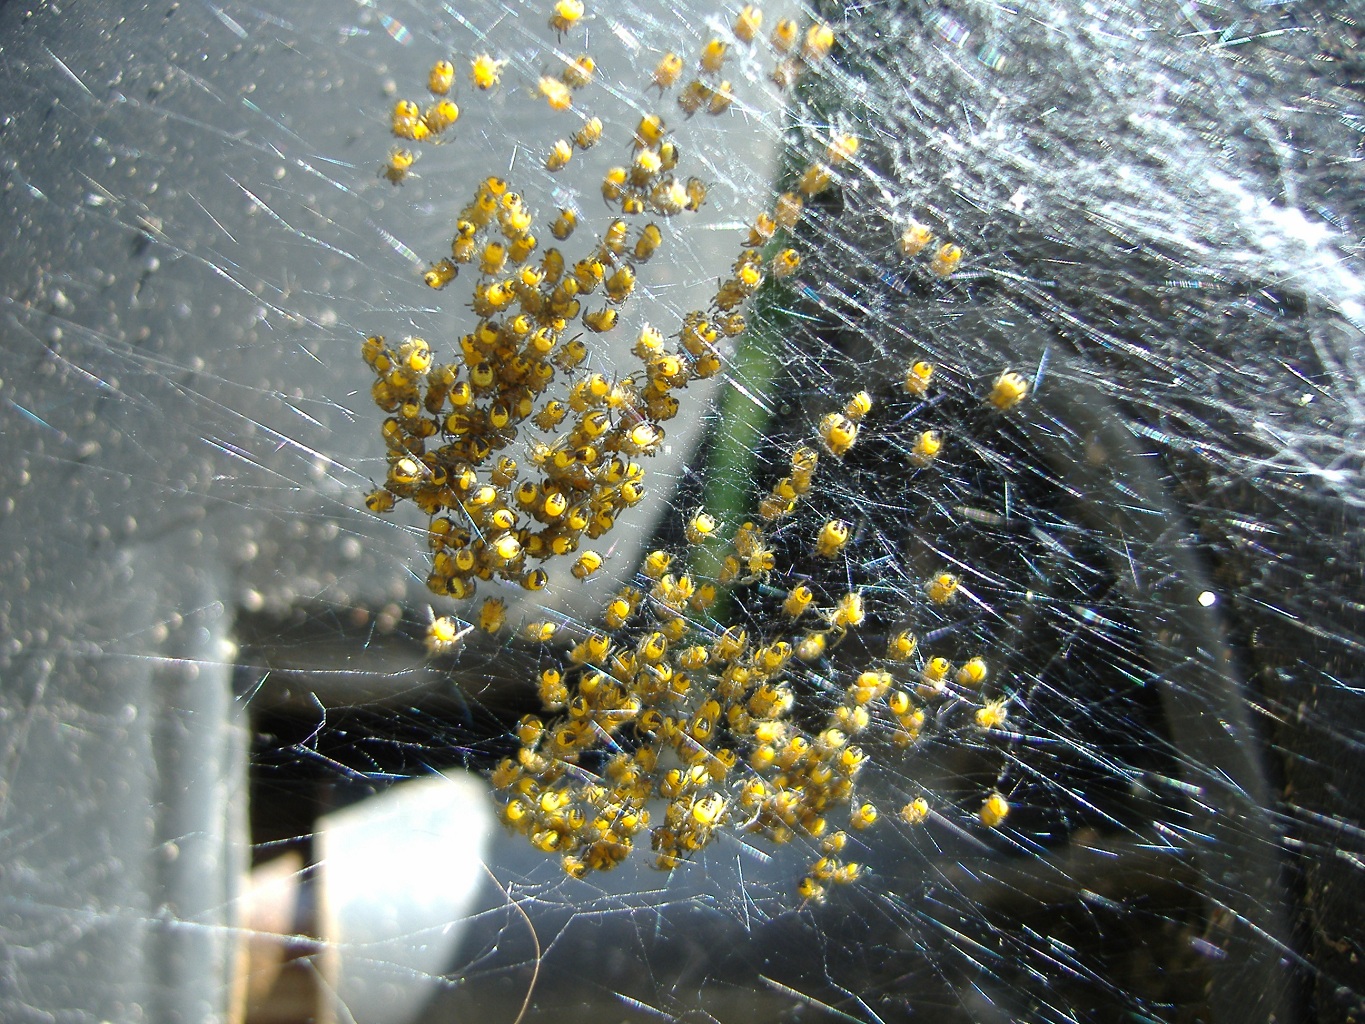 http://www.arksark.org/blog/wp-content/uploads/2010/05/Araneus-diadematus-Baby-European-Garden-Spiders.jpg